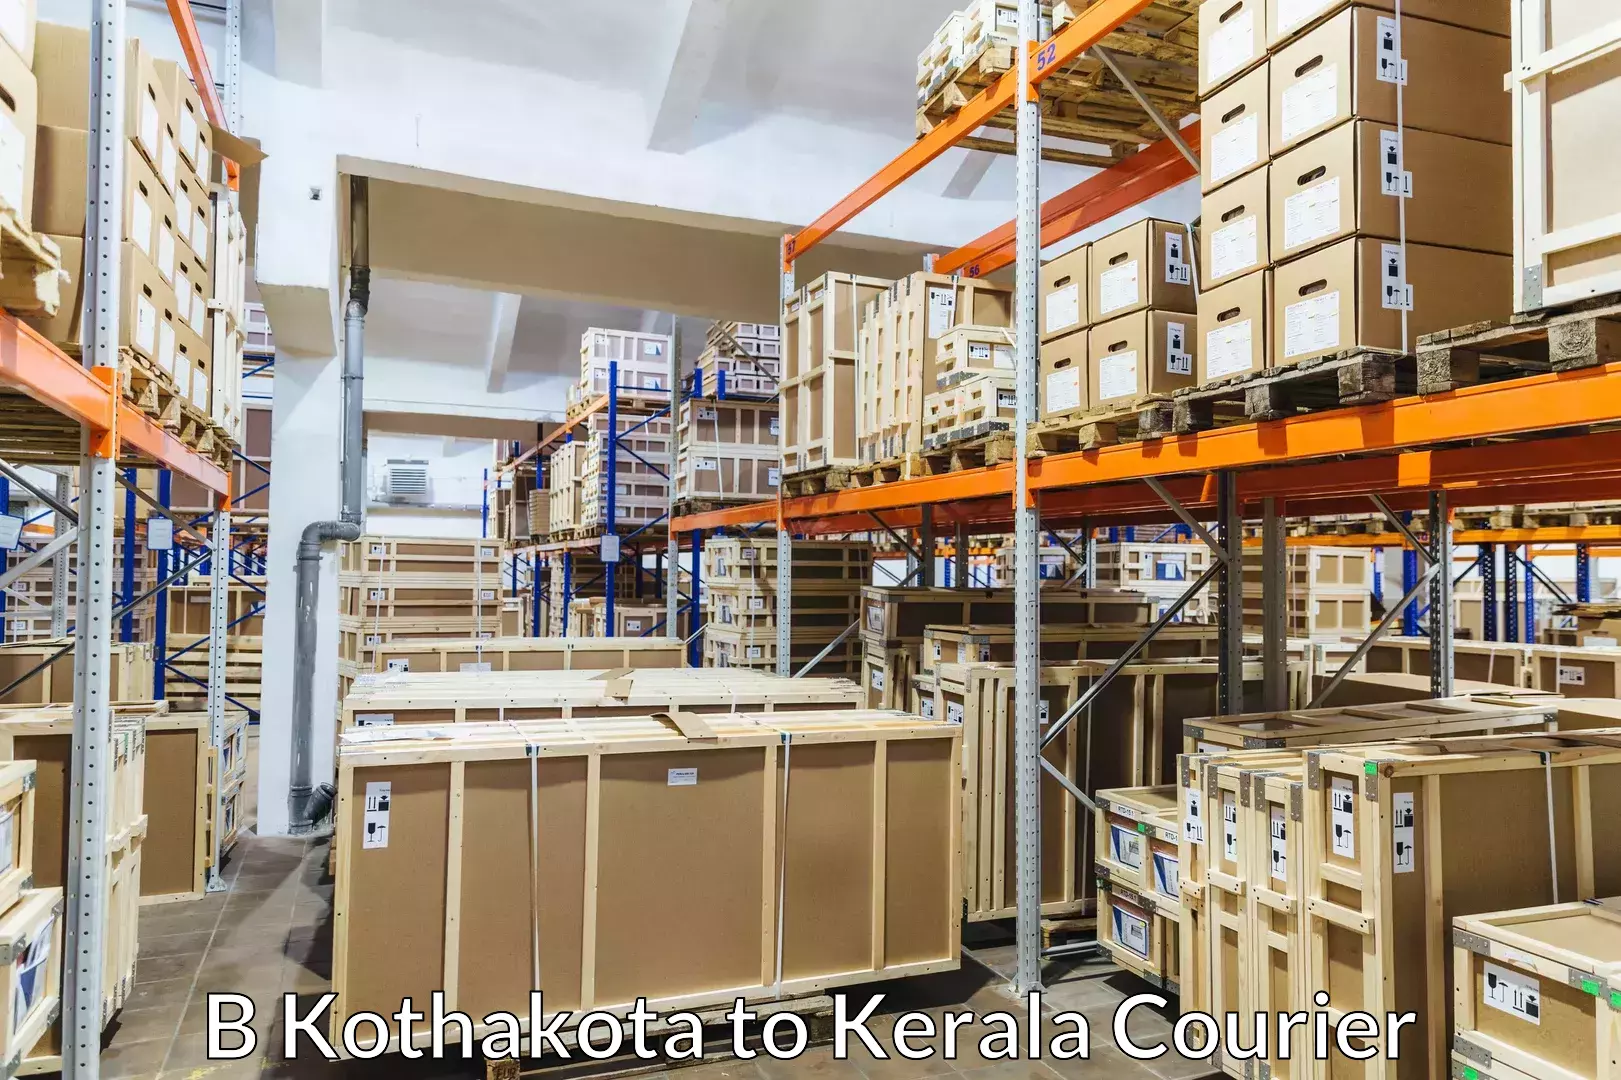 Trusted relocation experts B Kothakota to Kerala